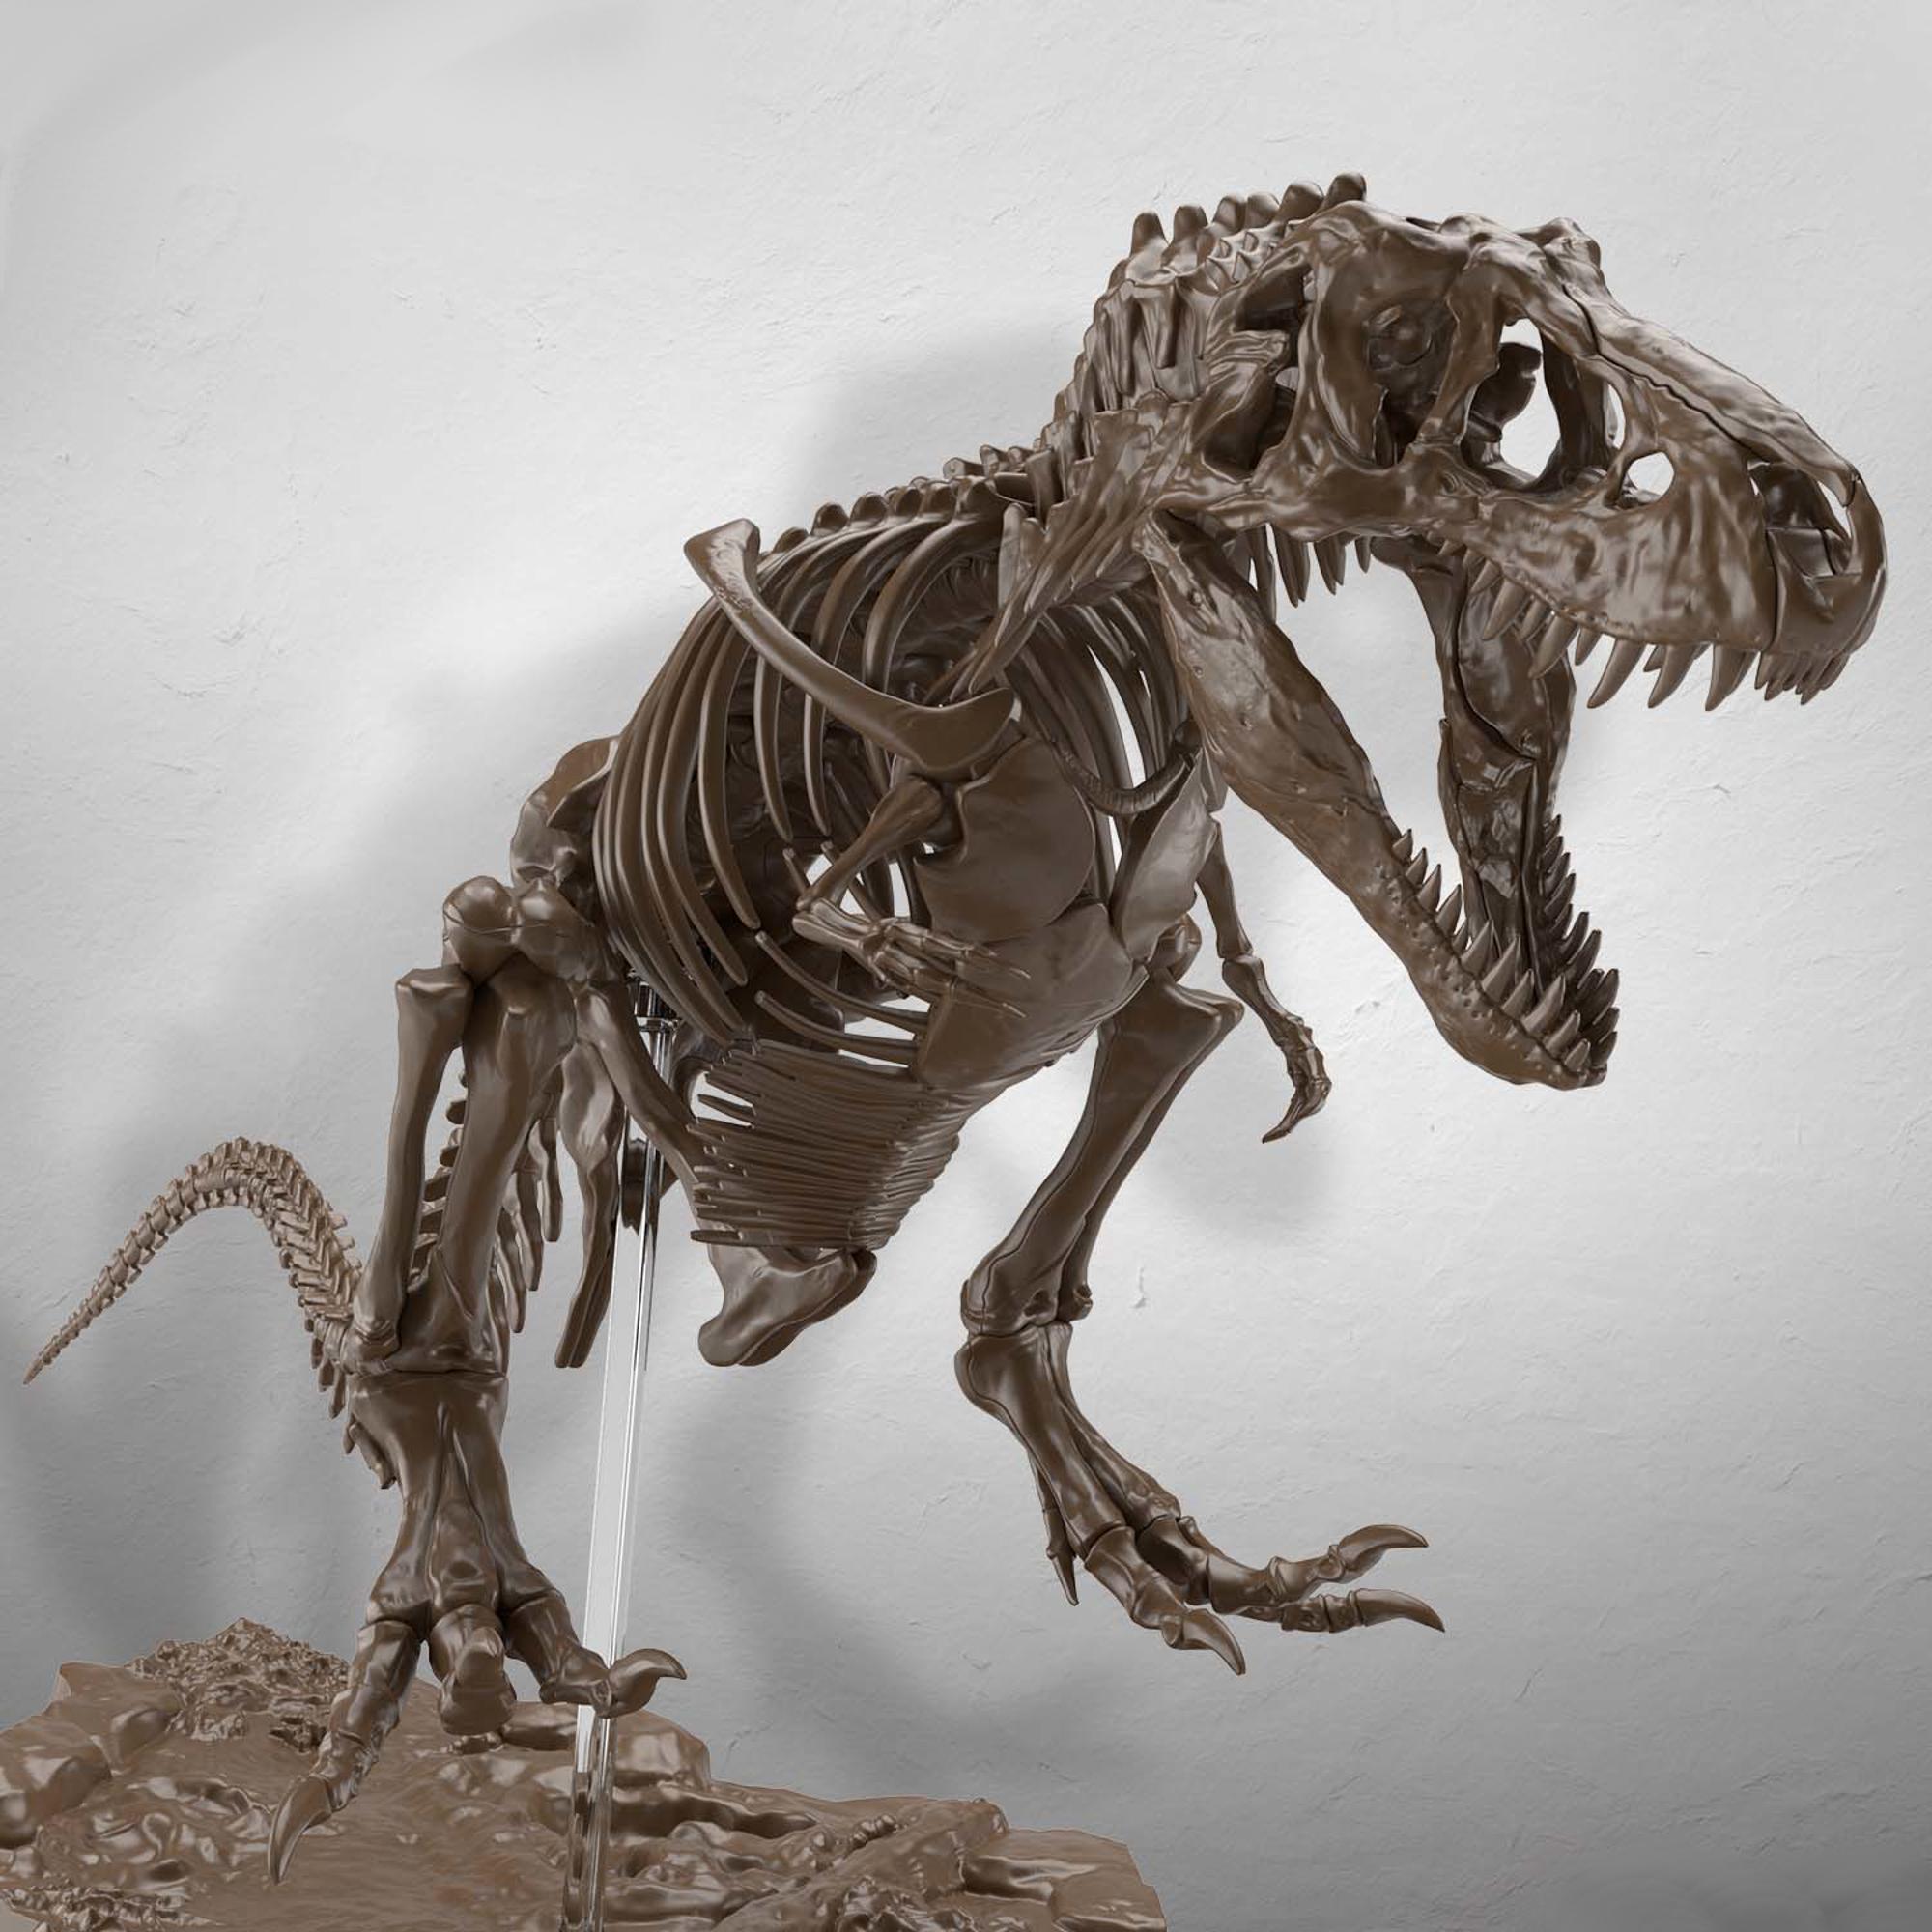 Bandai 1/32 Imaginary Skeleton Tyrannosaurus Rex Model Kit